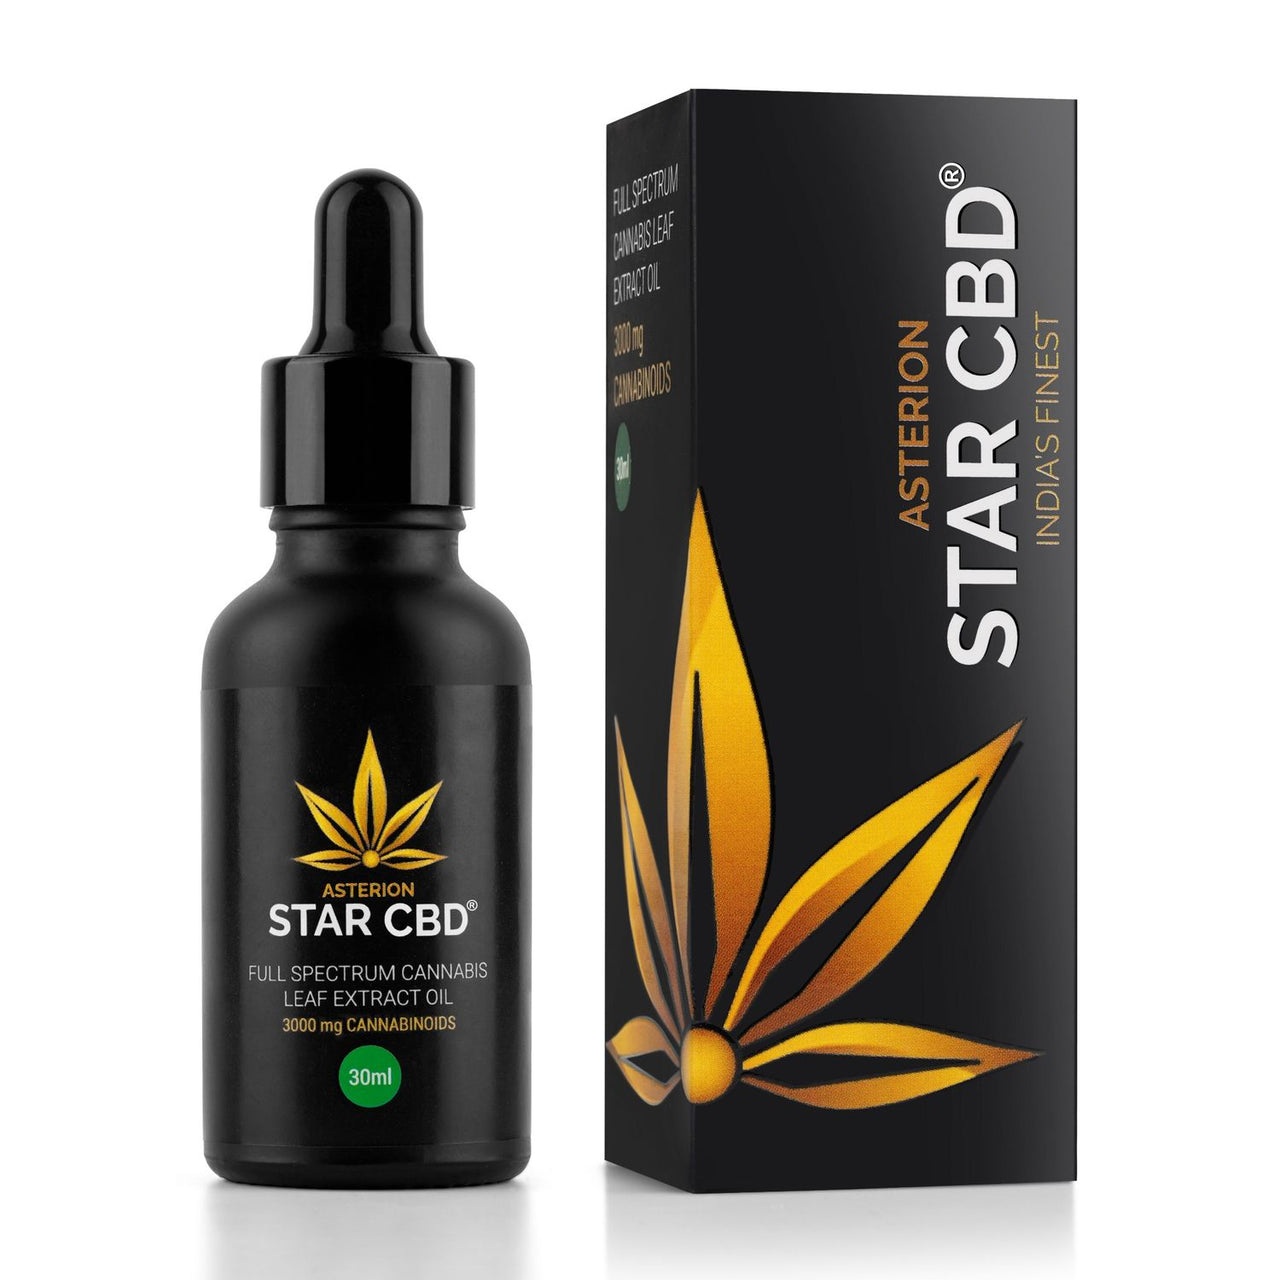 Star CBD- Full Spectrum Cannabis Leaf Extract Oil - 3000mg